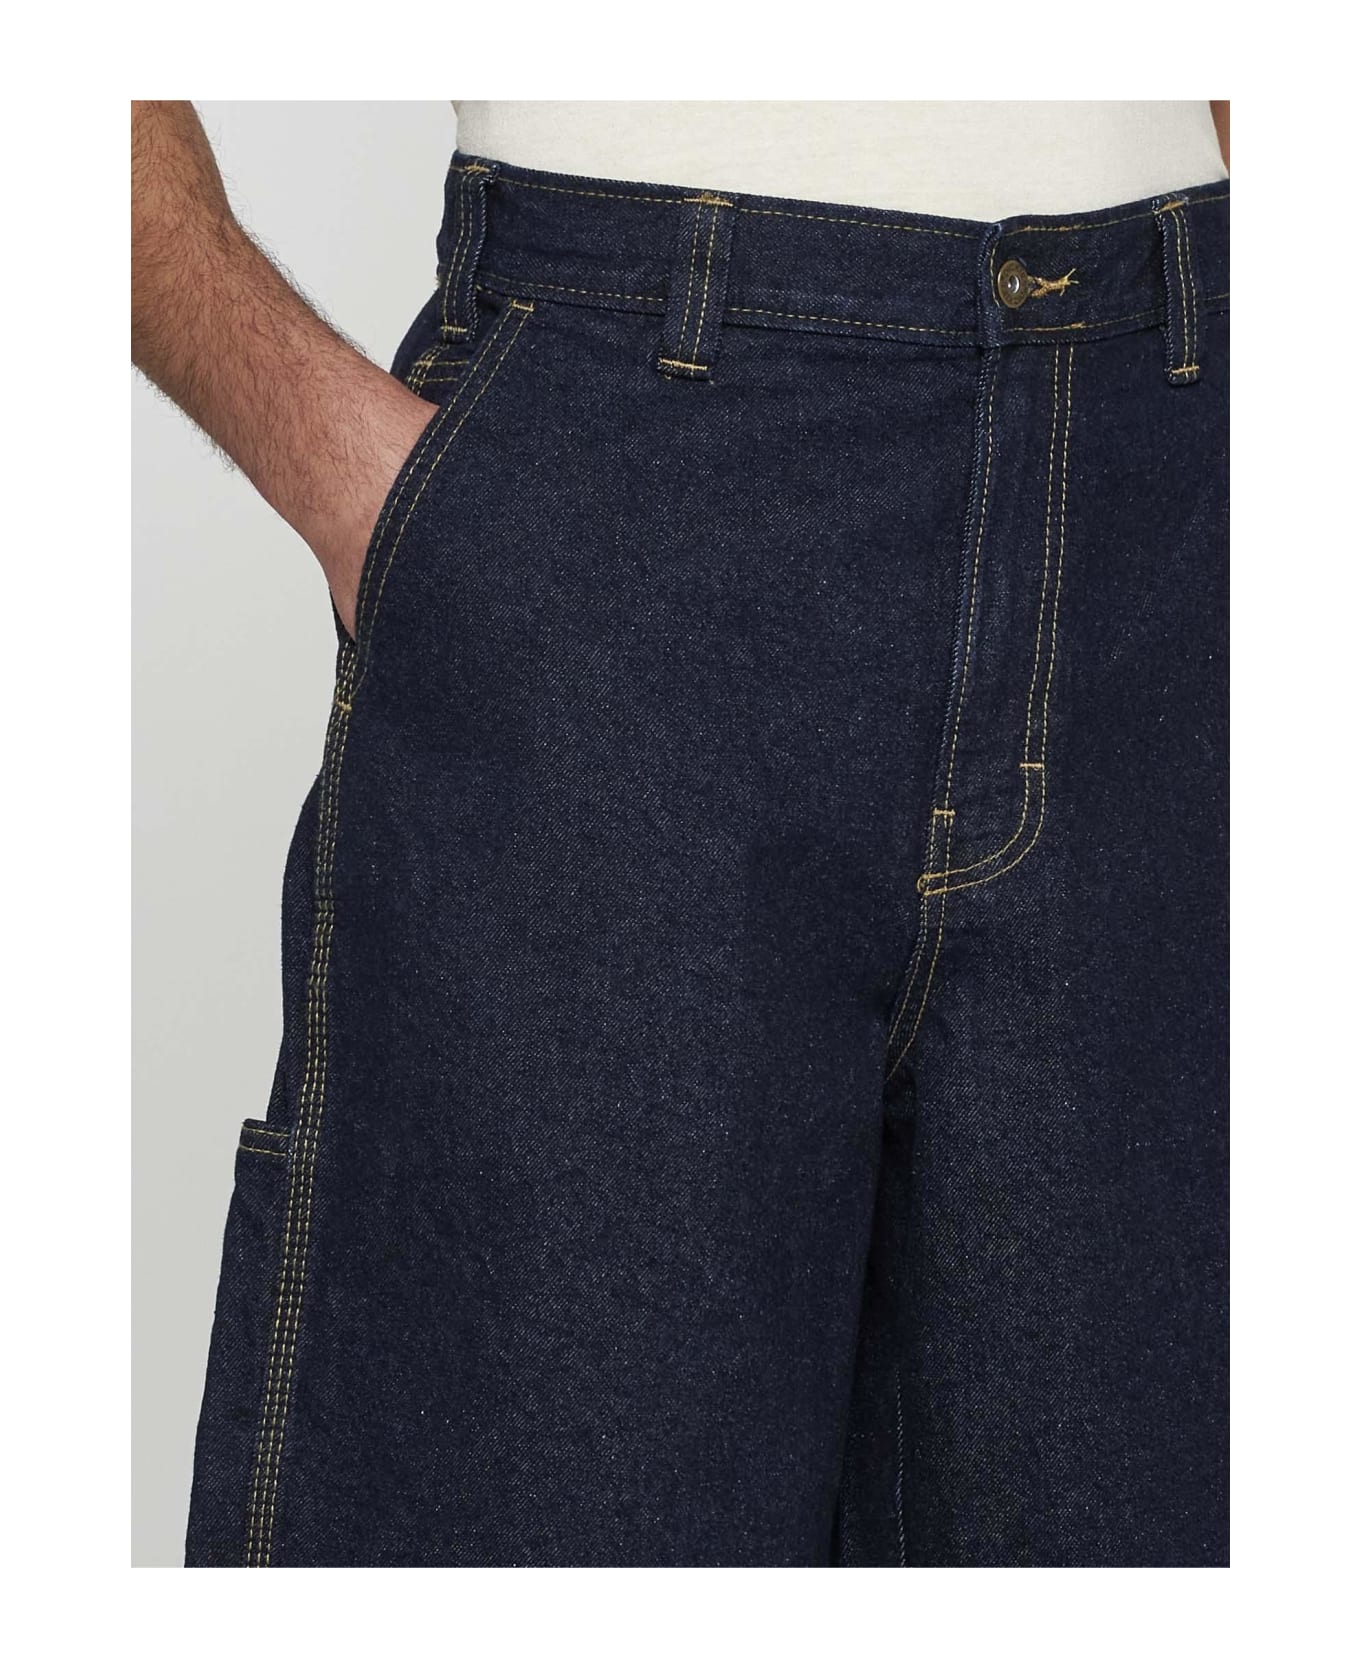 Dickies Madison Denim Shorts - DENIM BLUE ショートパンツ